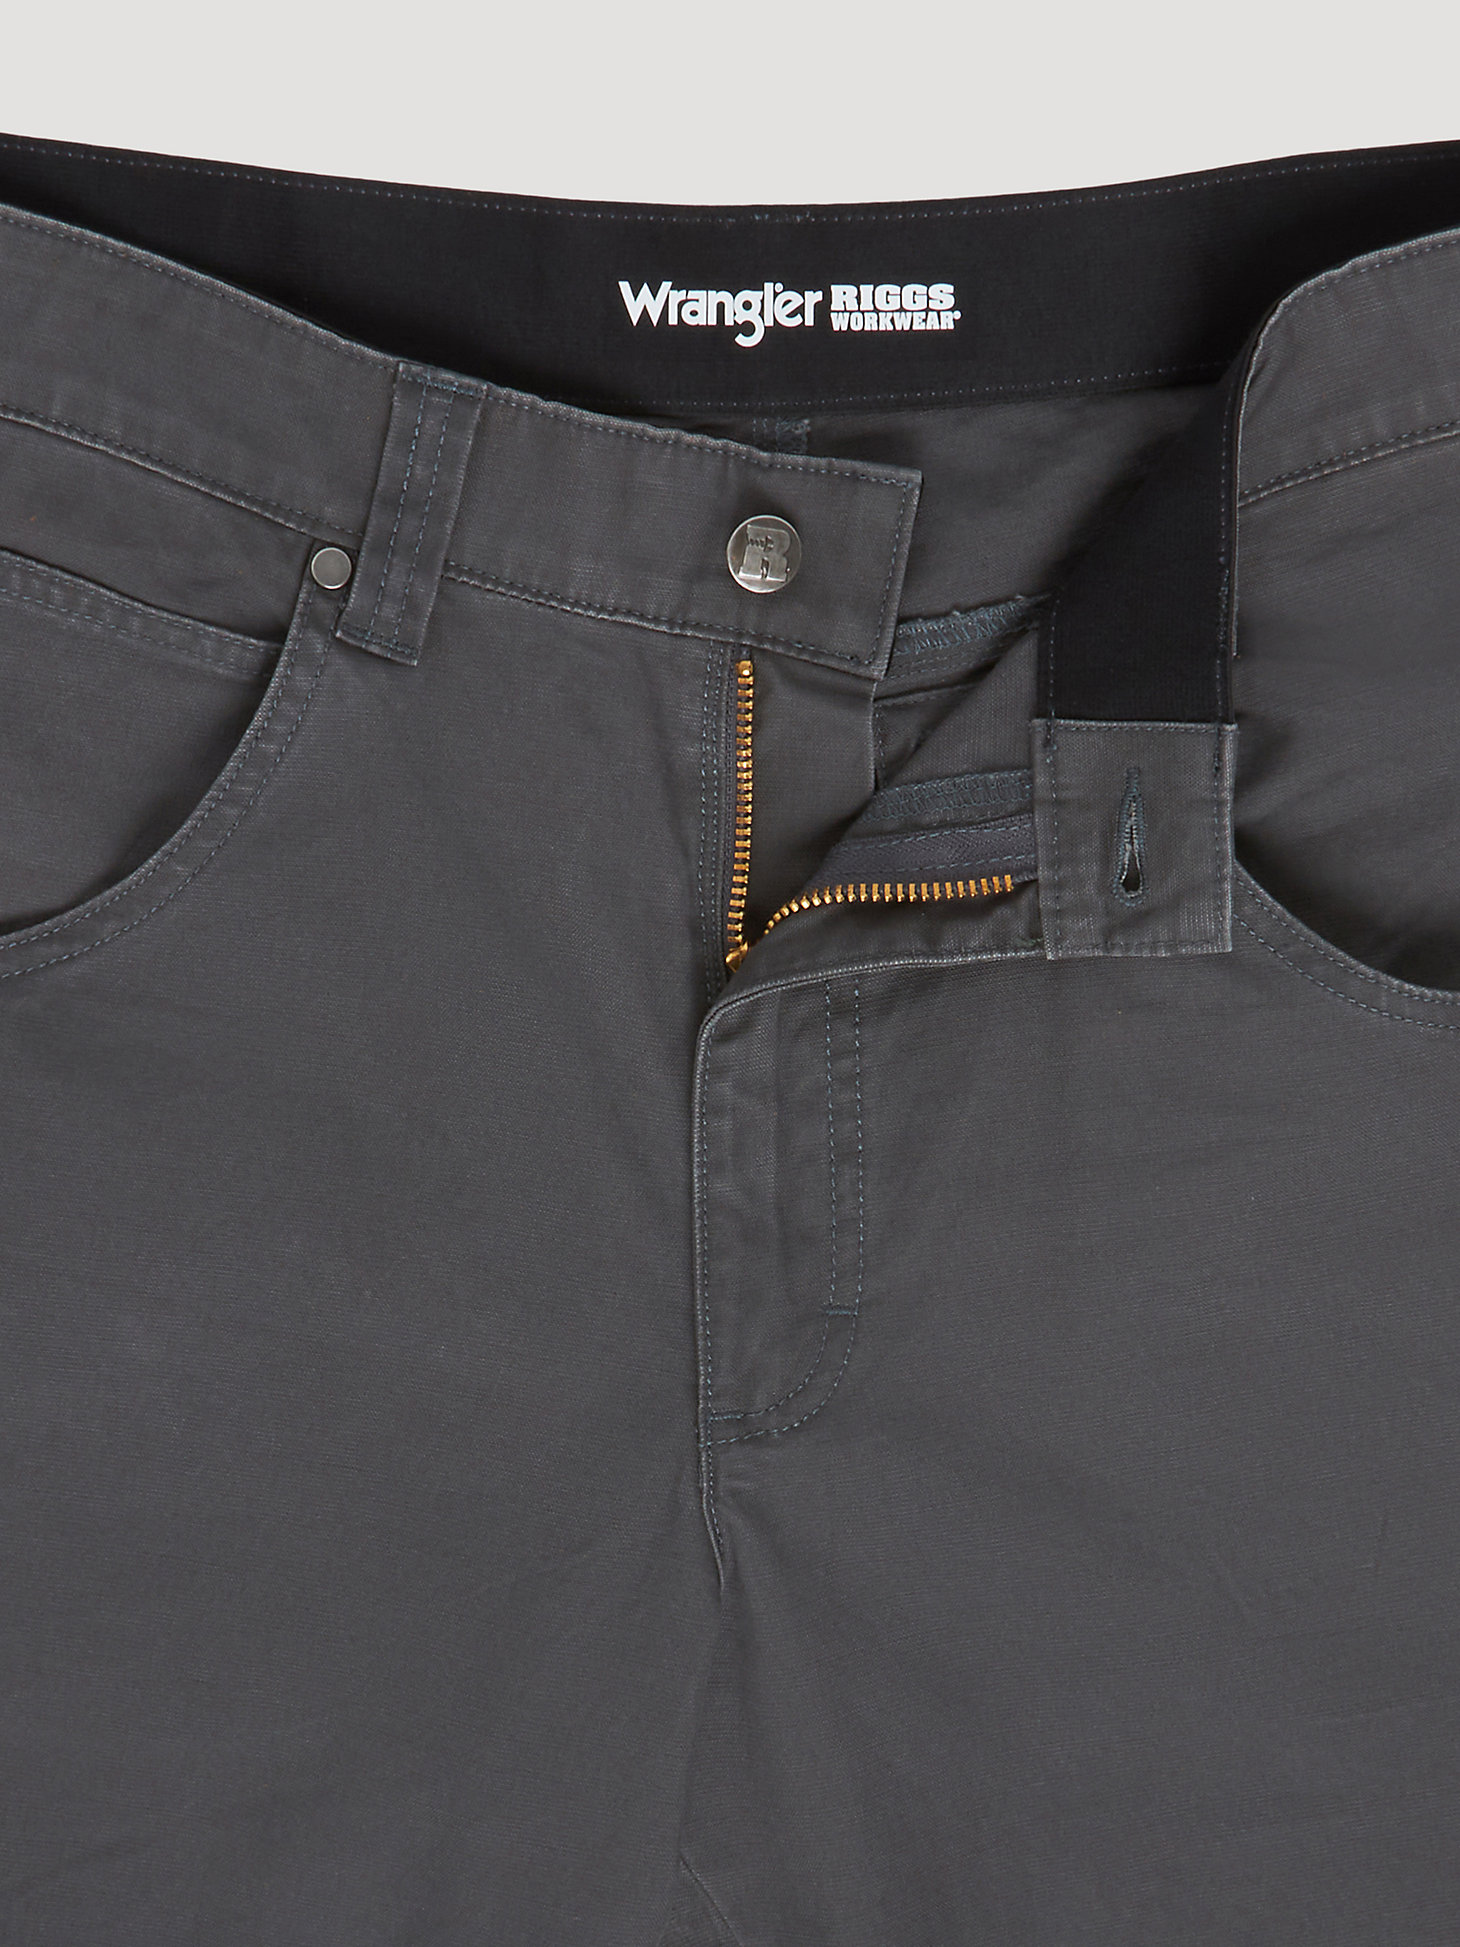 Wrangler® RIGGS WORKWEAR® Utility Work Pant in Pinstripe Grey alternative view 9